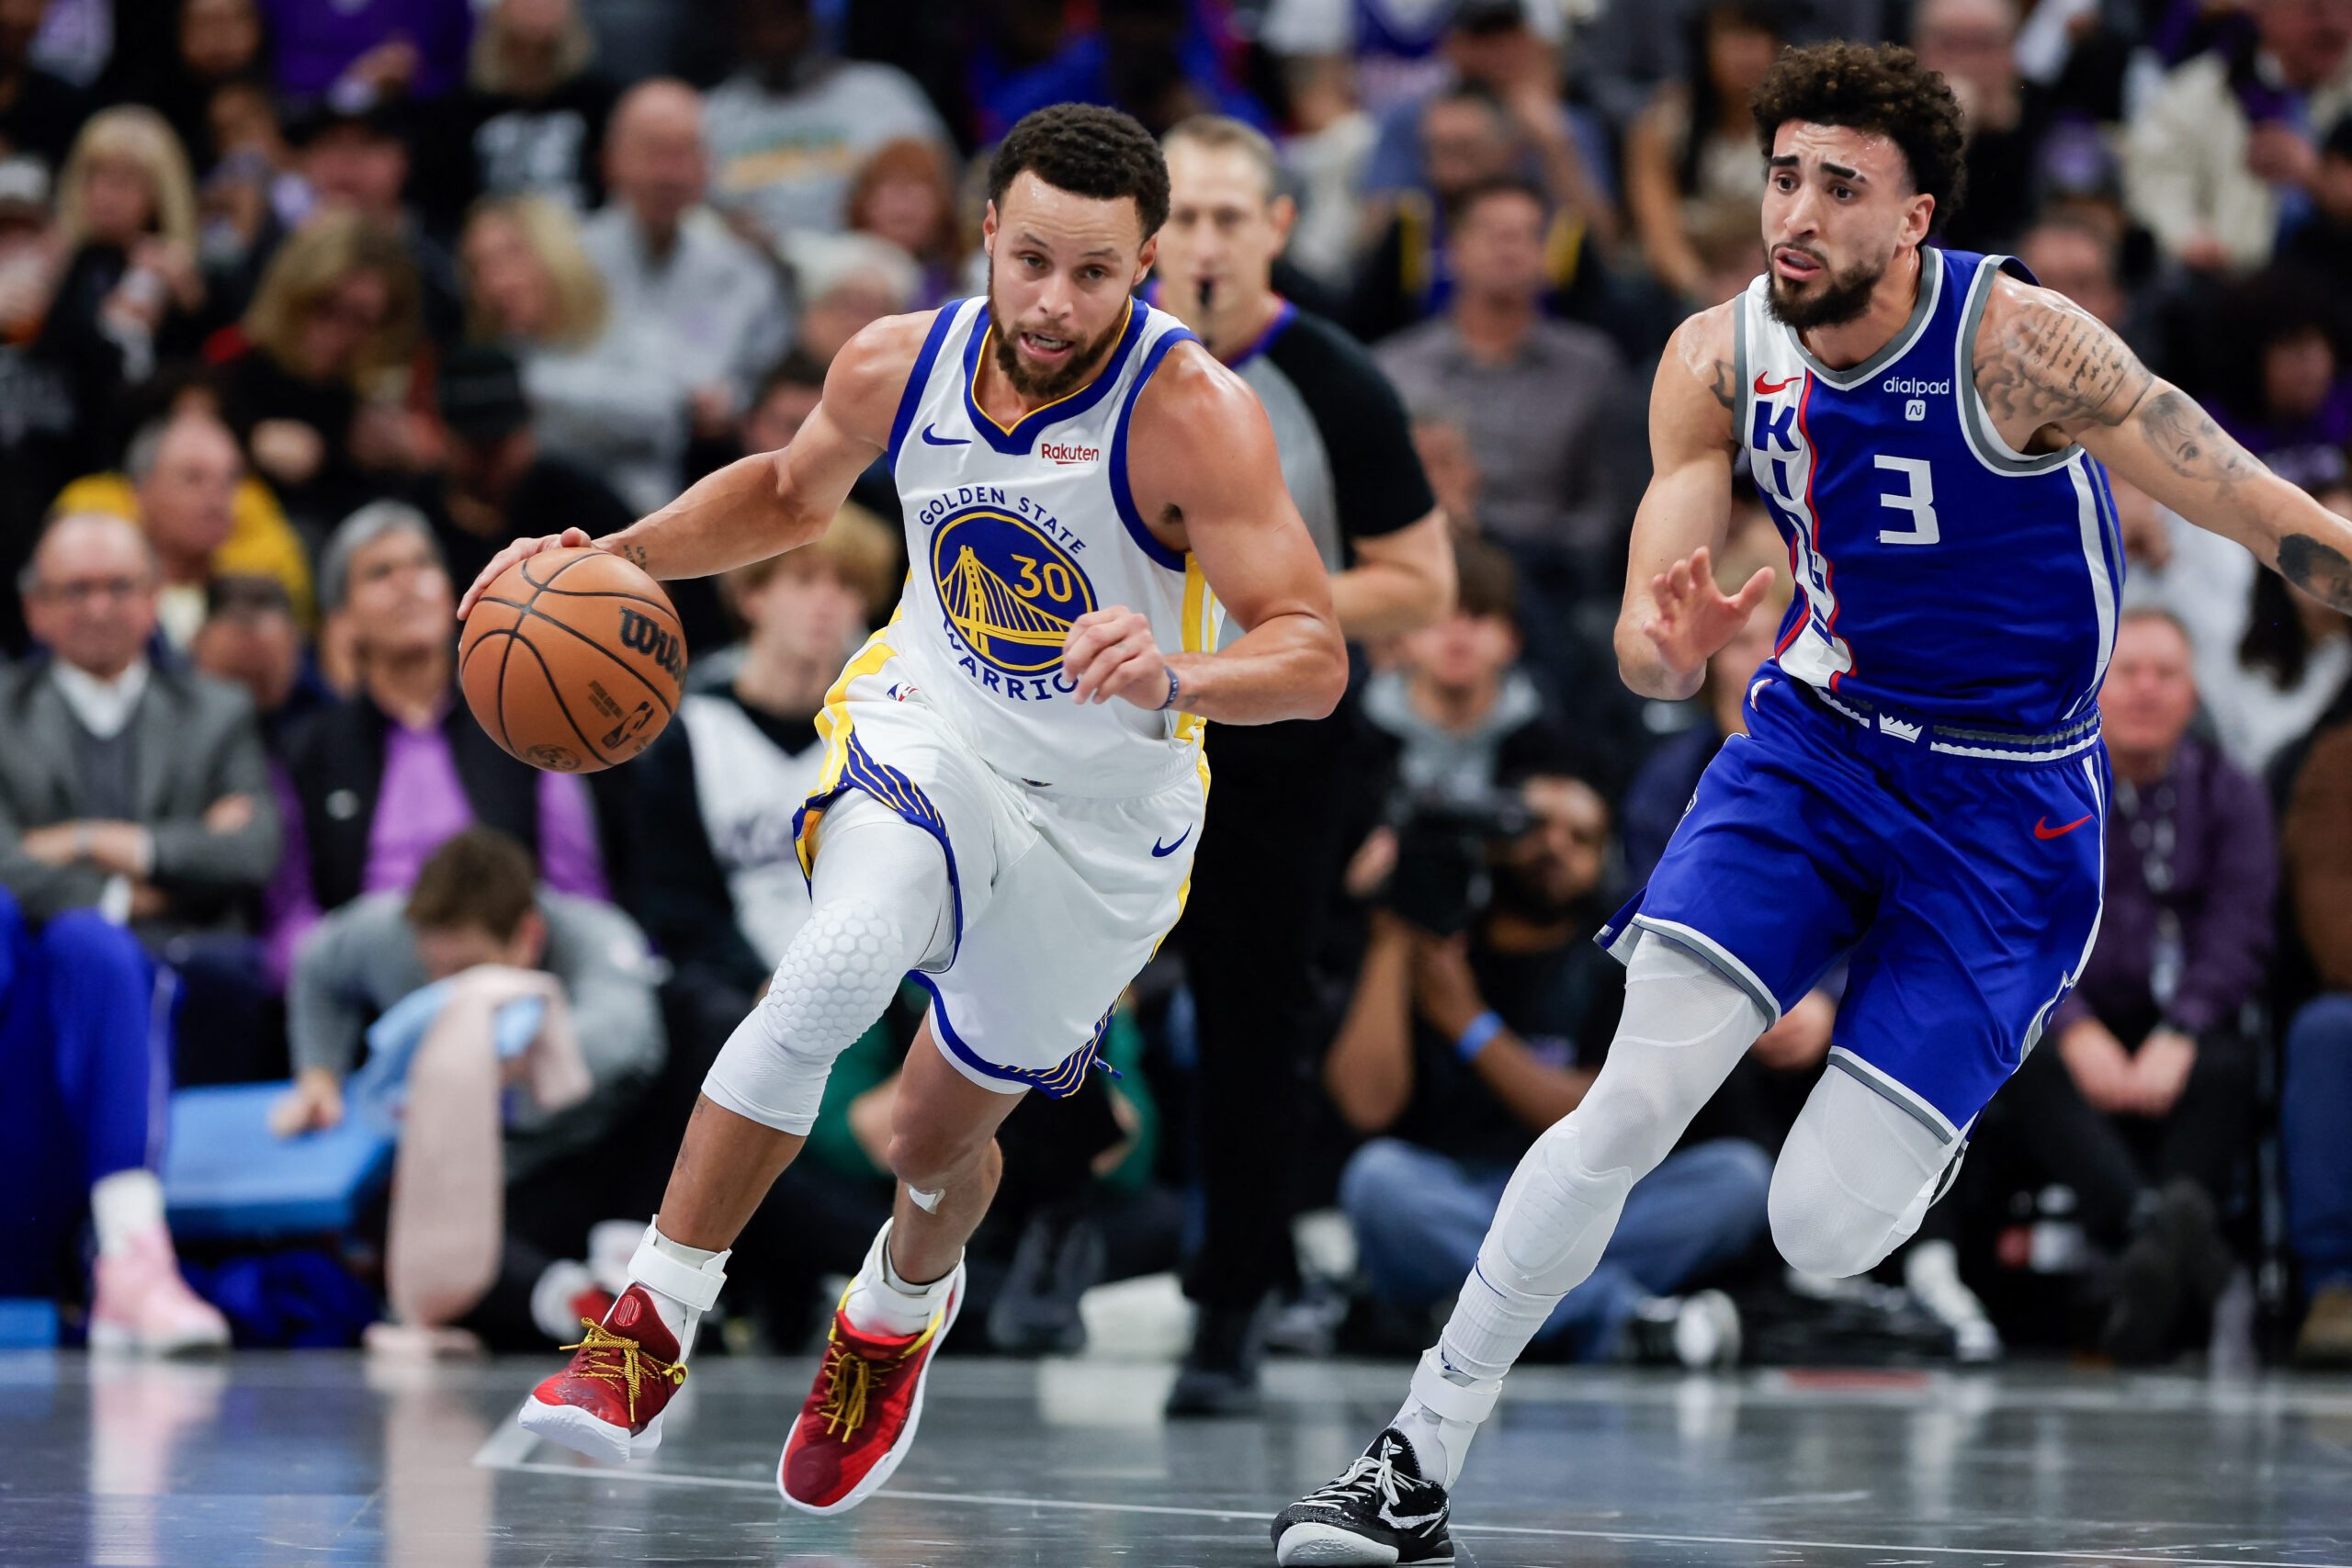 Kings stun Warriors, advance to in-season tourney quarterfinals